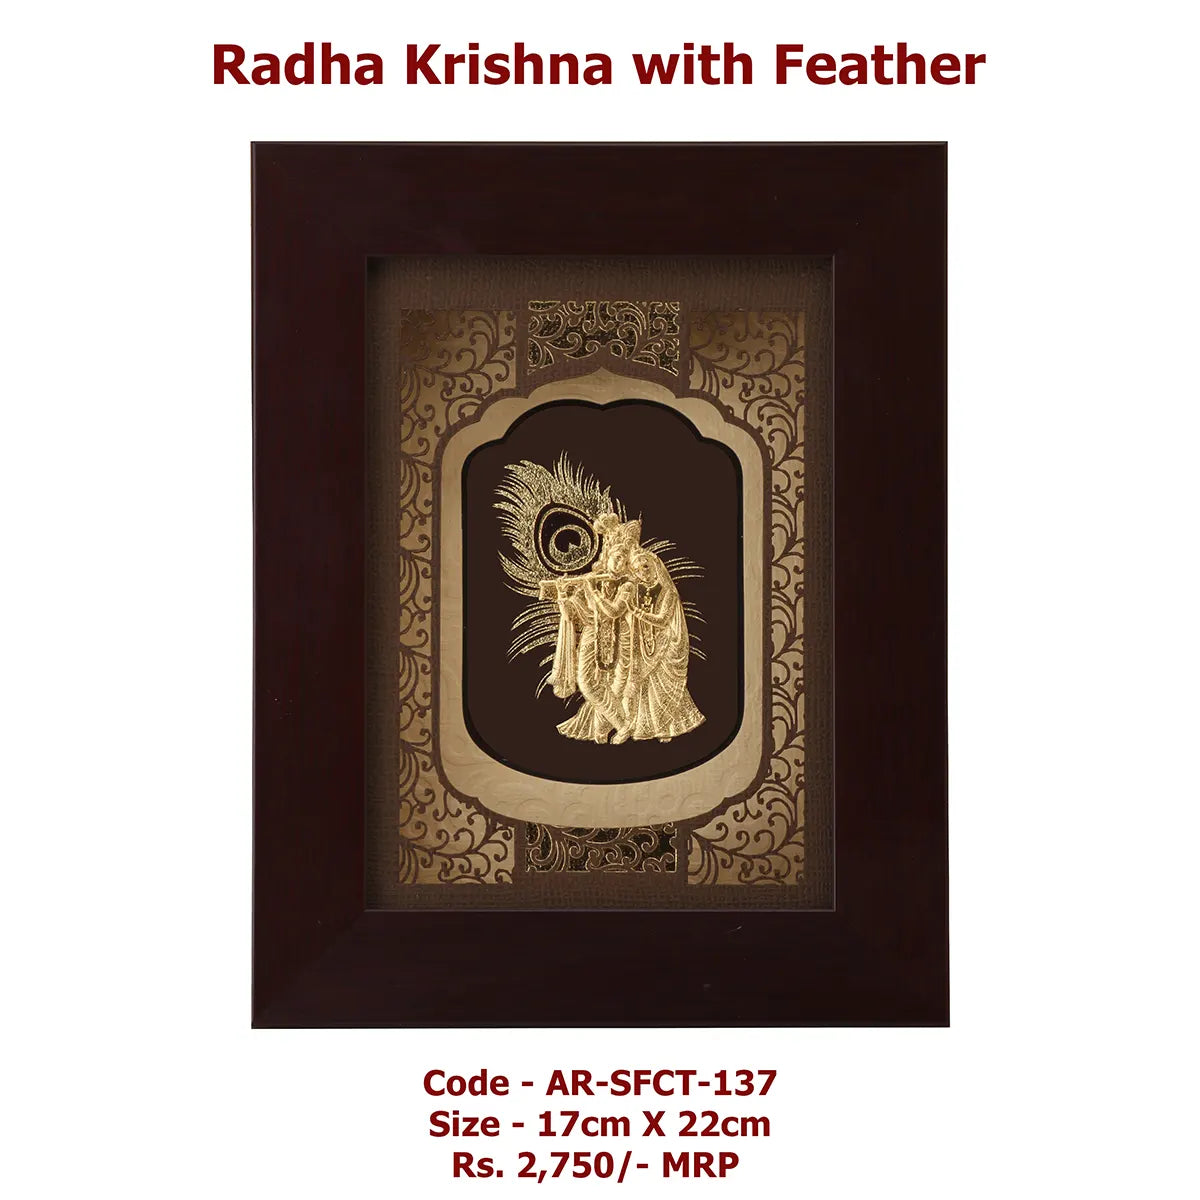 Radha Krishna with Feather Frame Big size